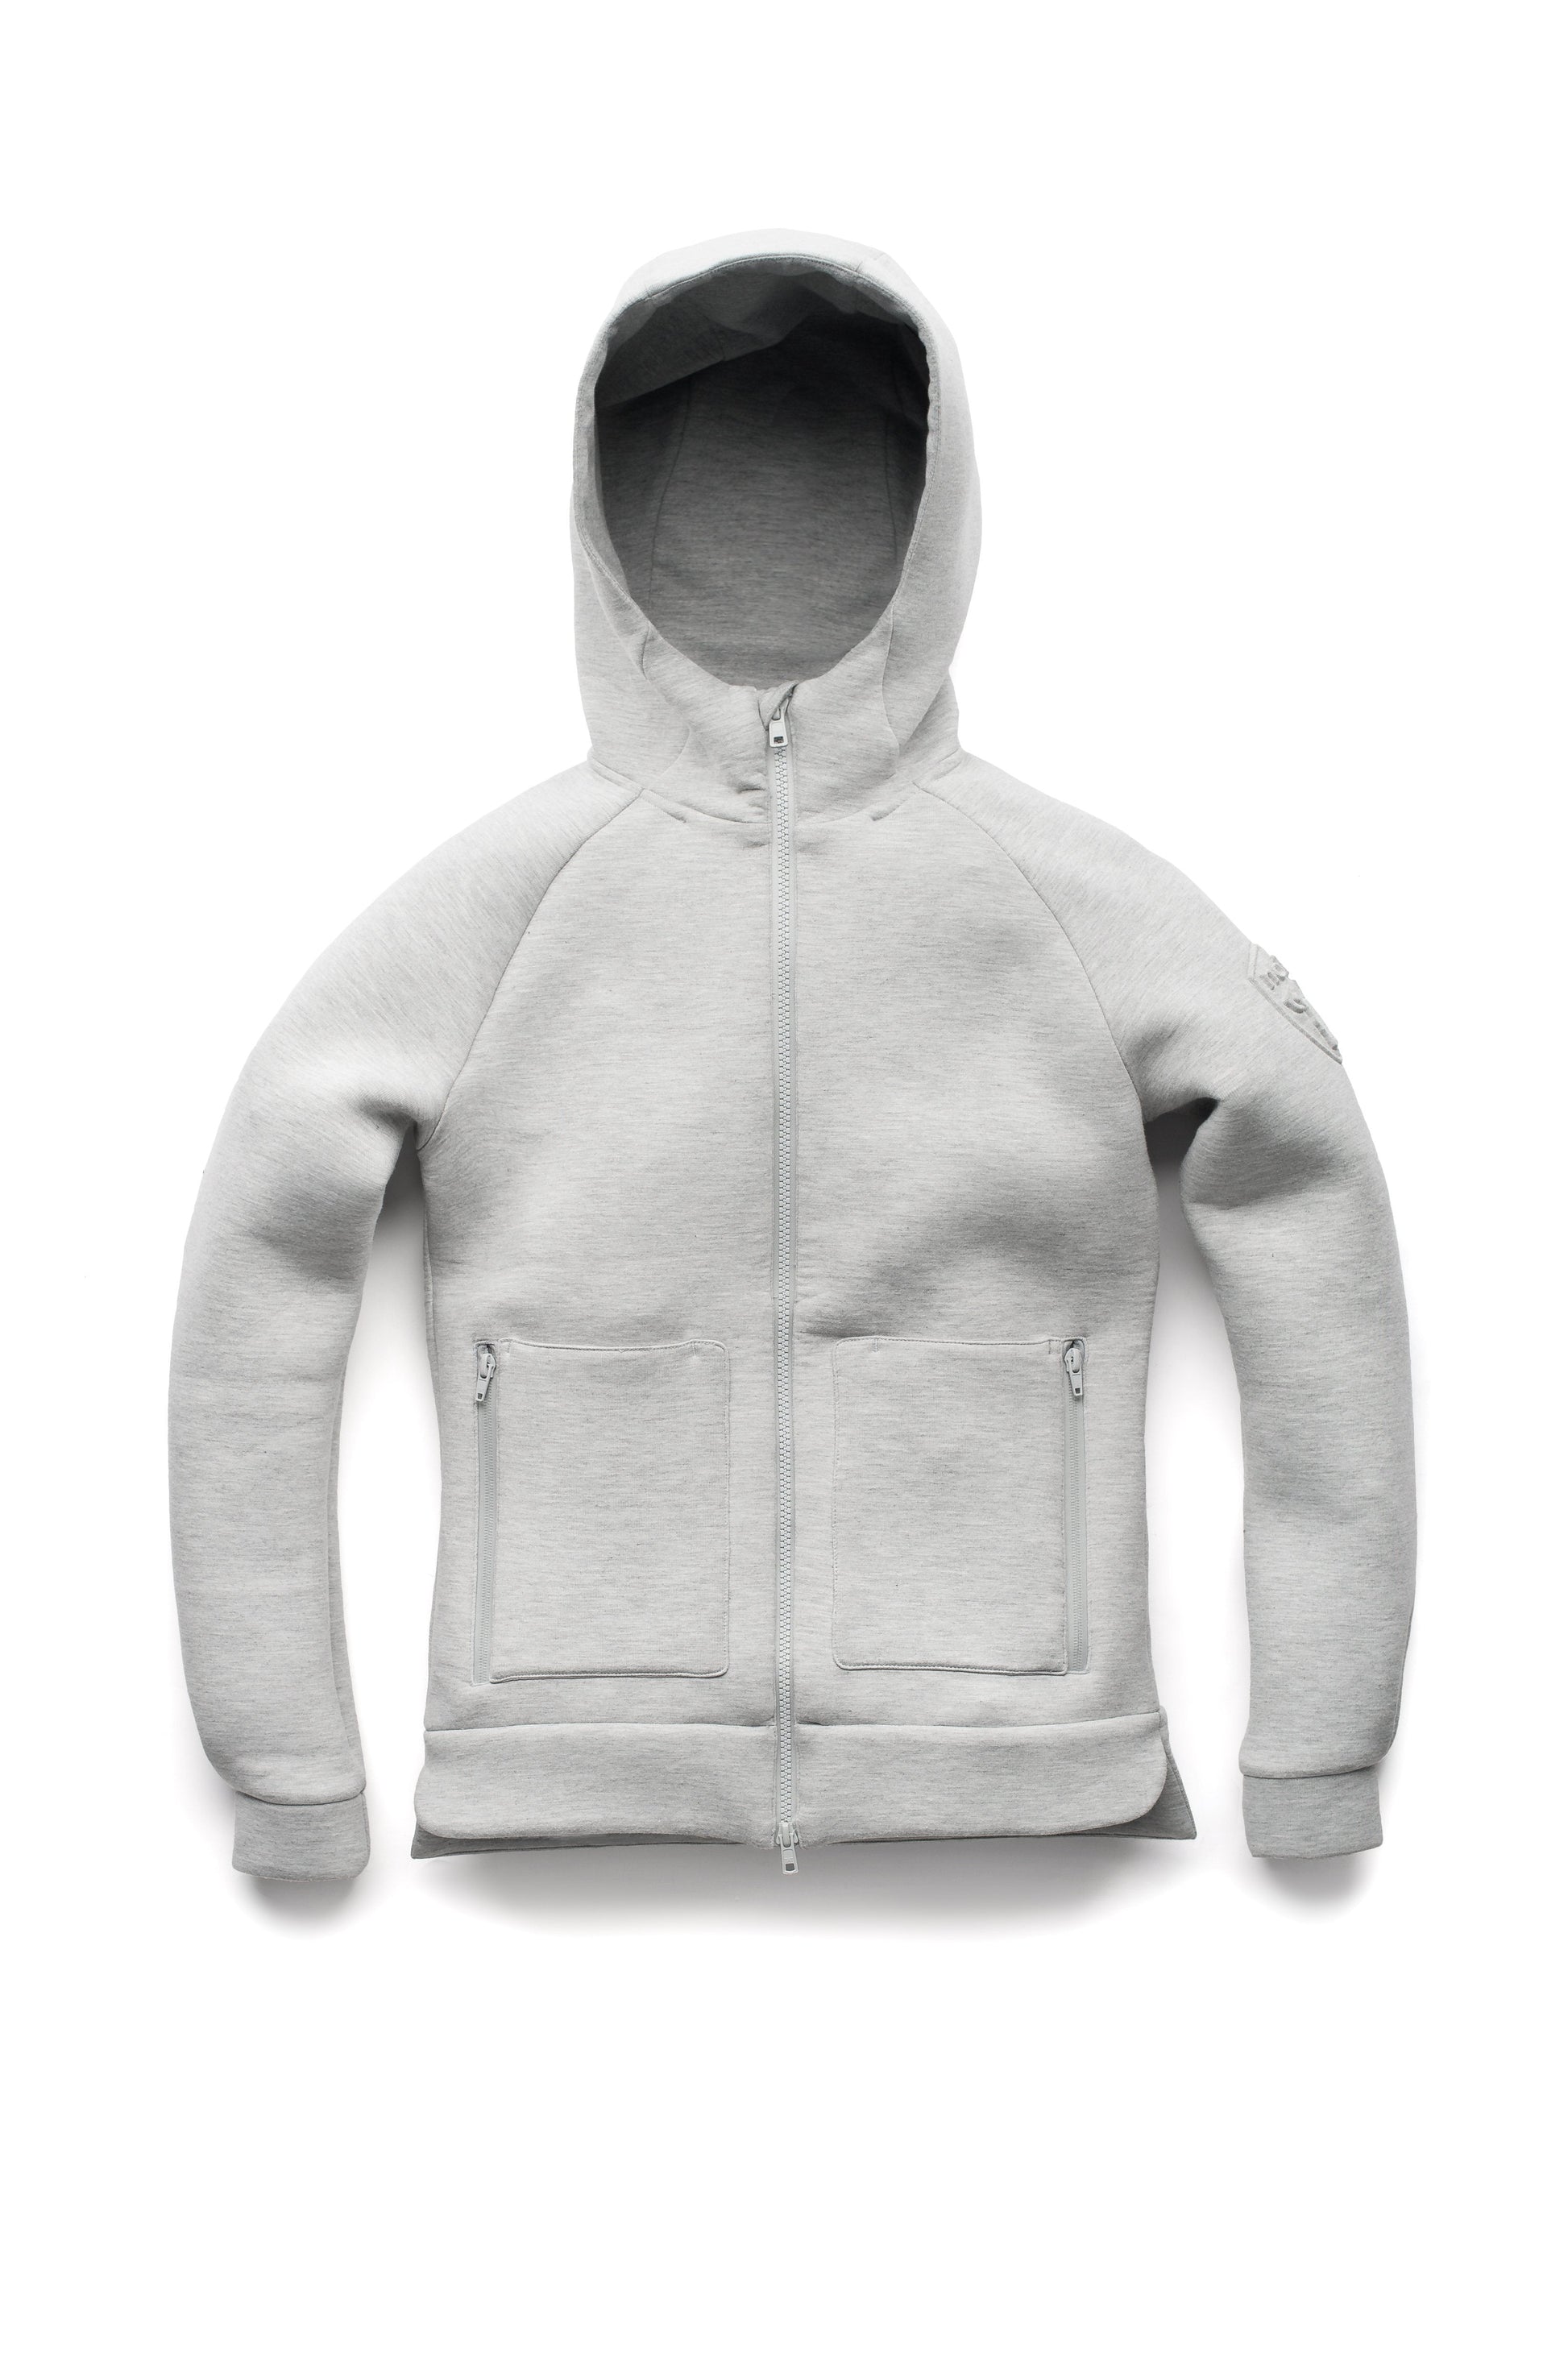 Structured women's hoodie with exposed zipper in Grey Melange